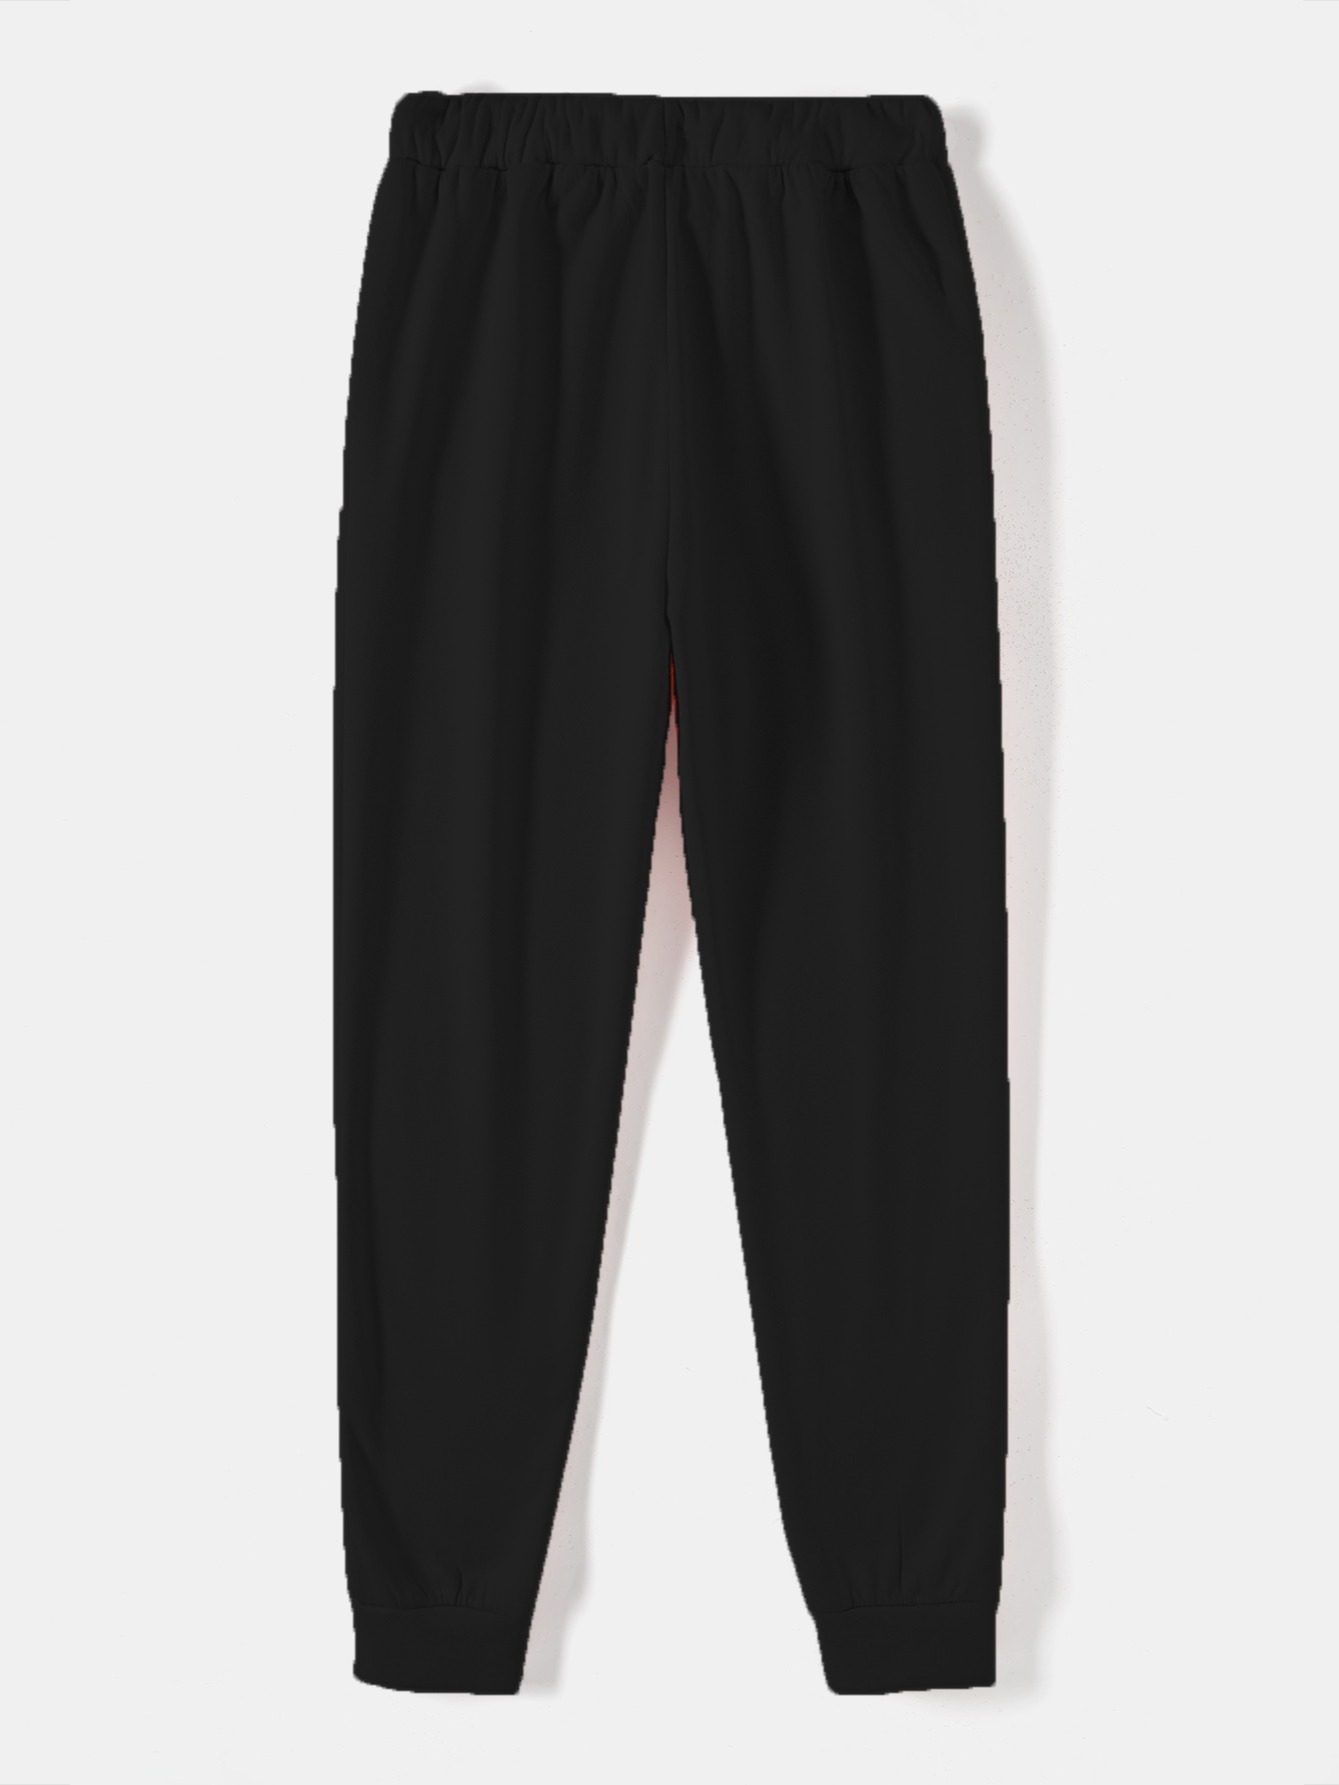 solid drawstring thermal sweatpants versatile loose comfy jogger pants womens clothing details 8